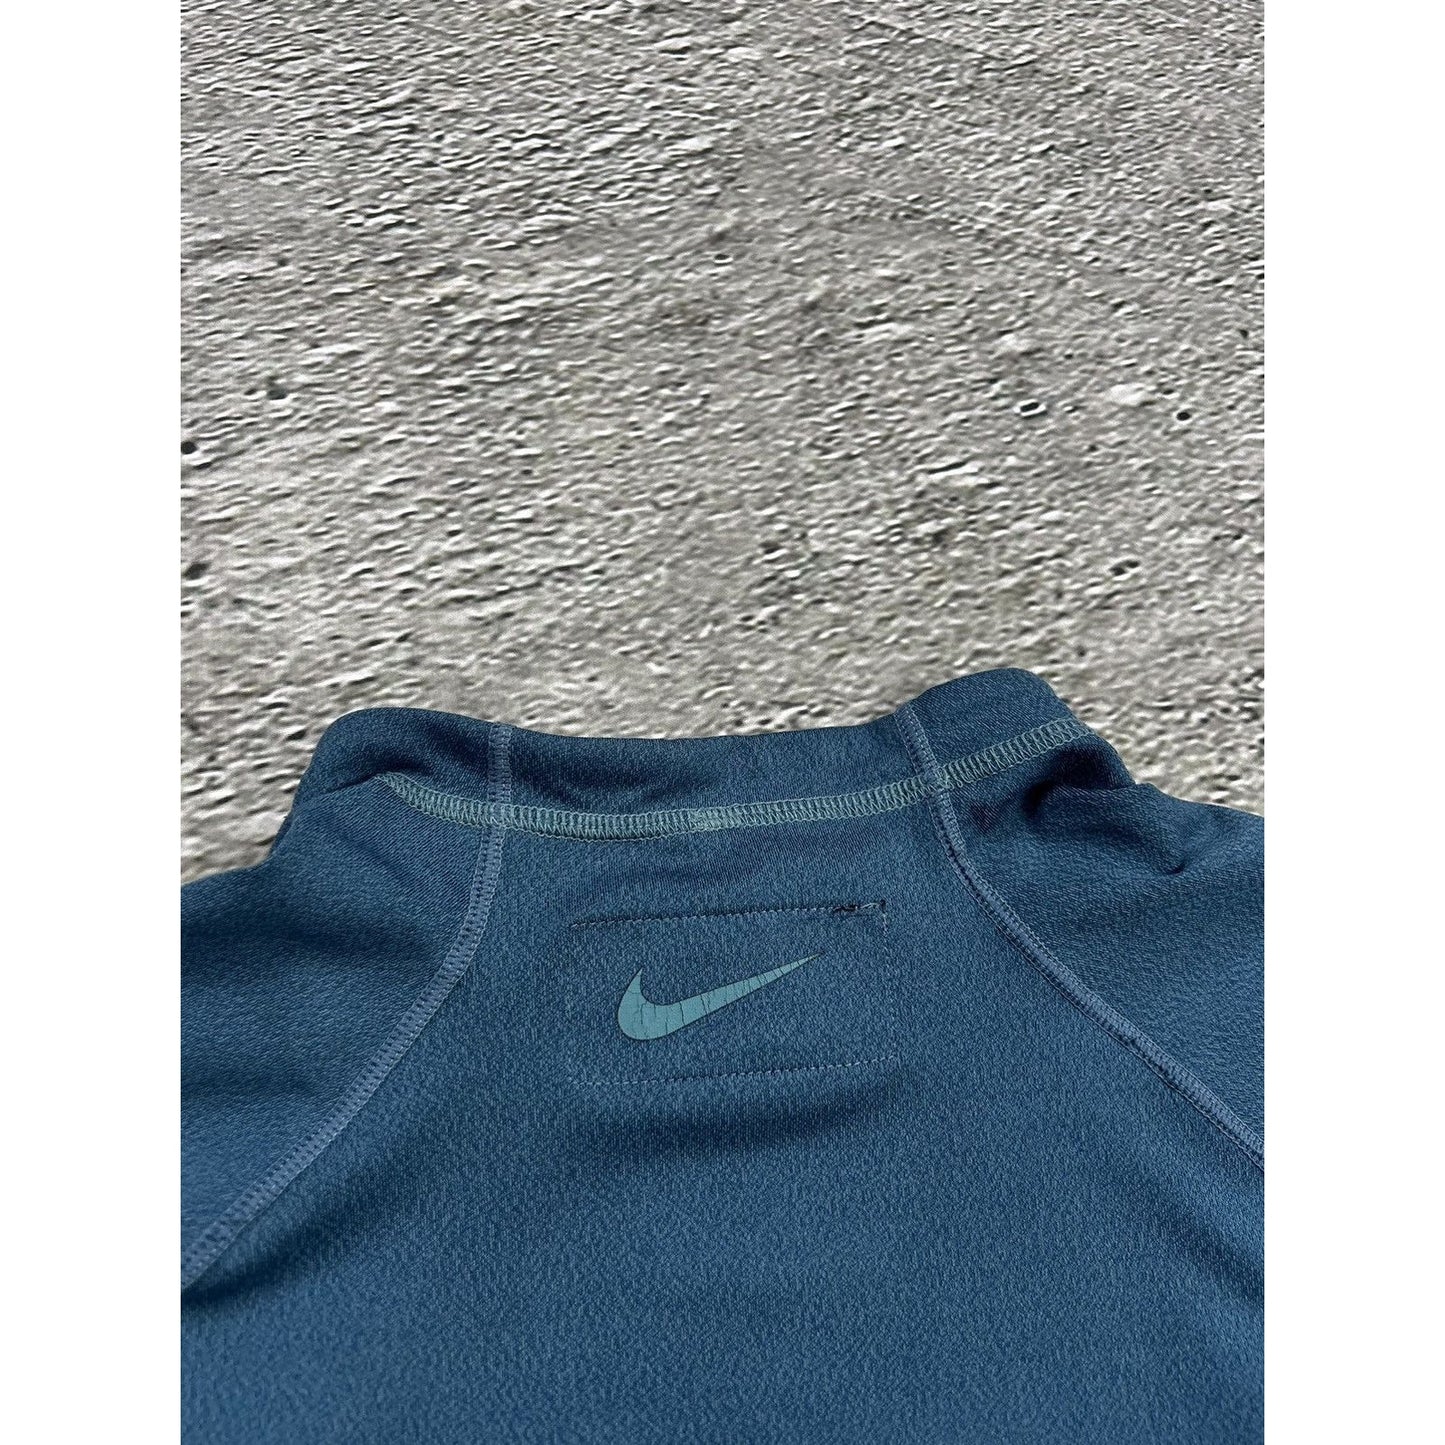 Nike ACG vintage longsleeve blue central logo base layer